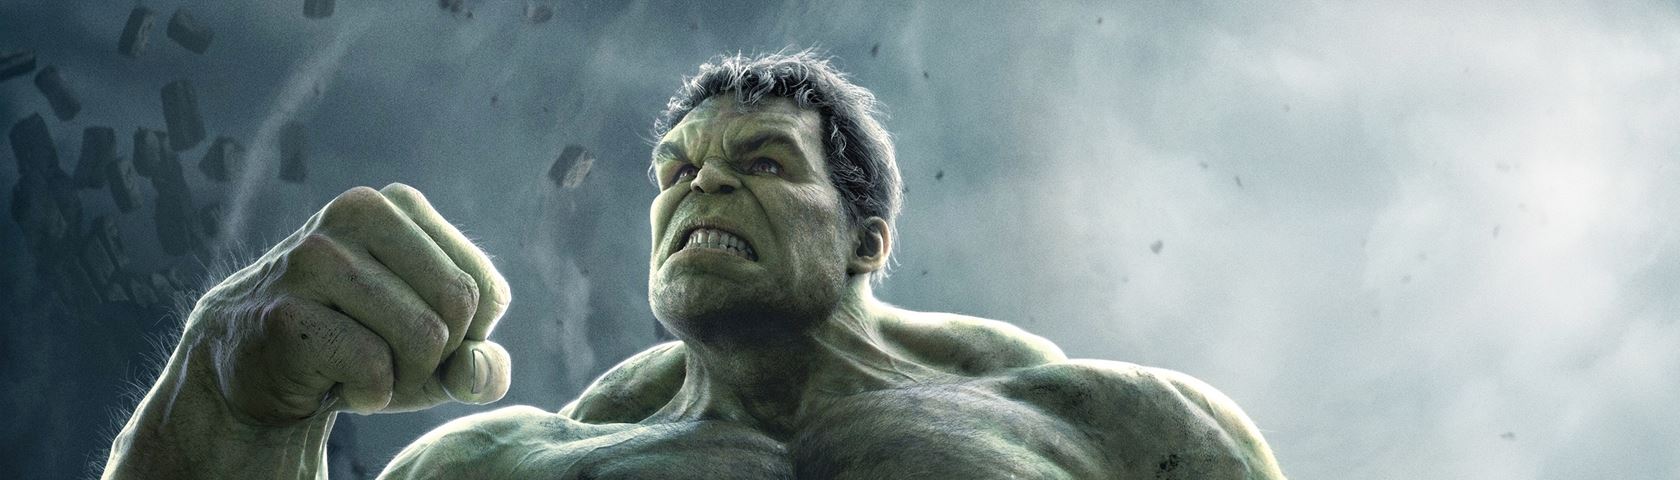 The Incredable Hulk